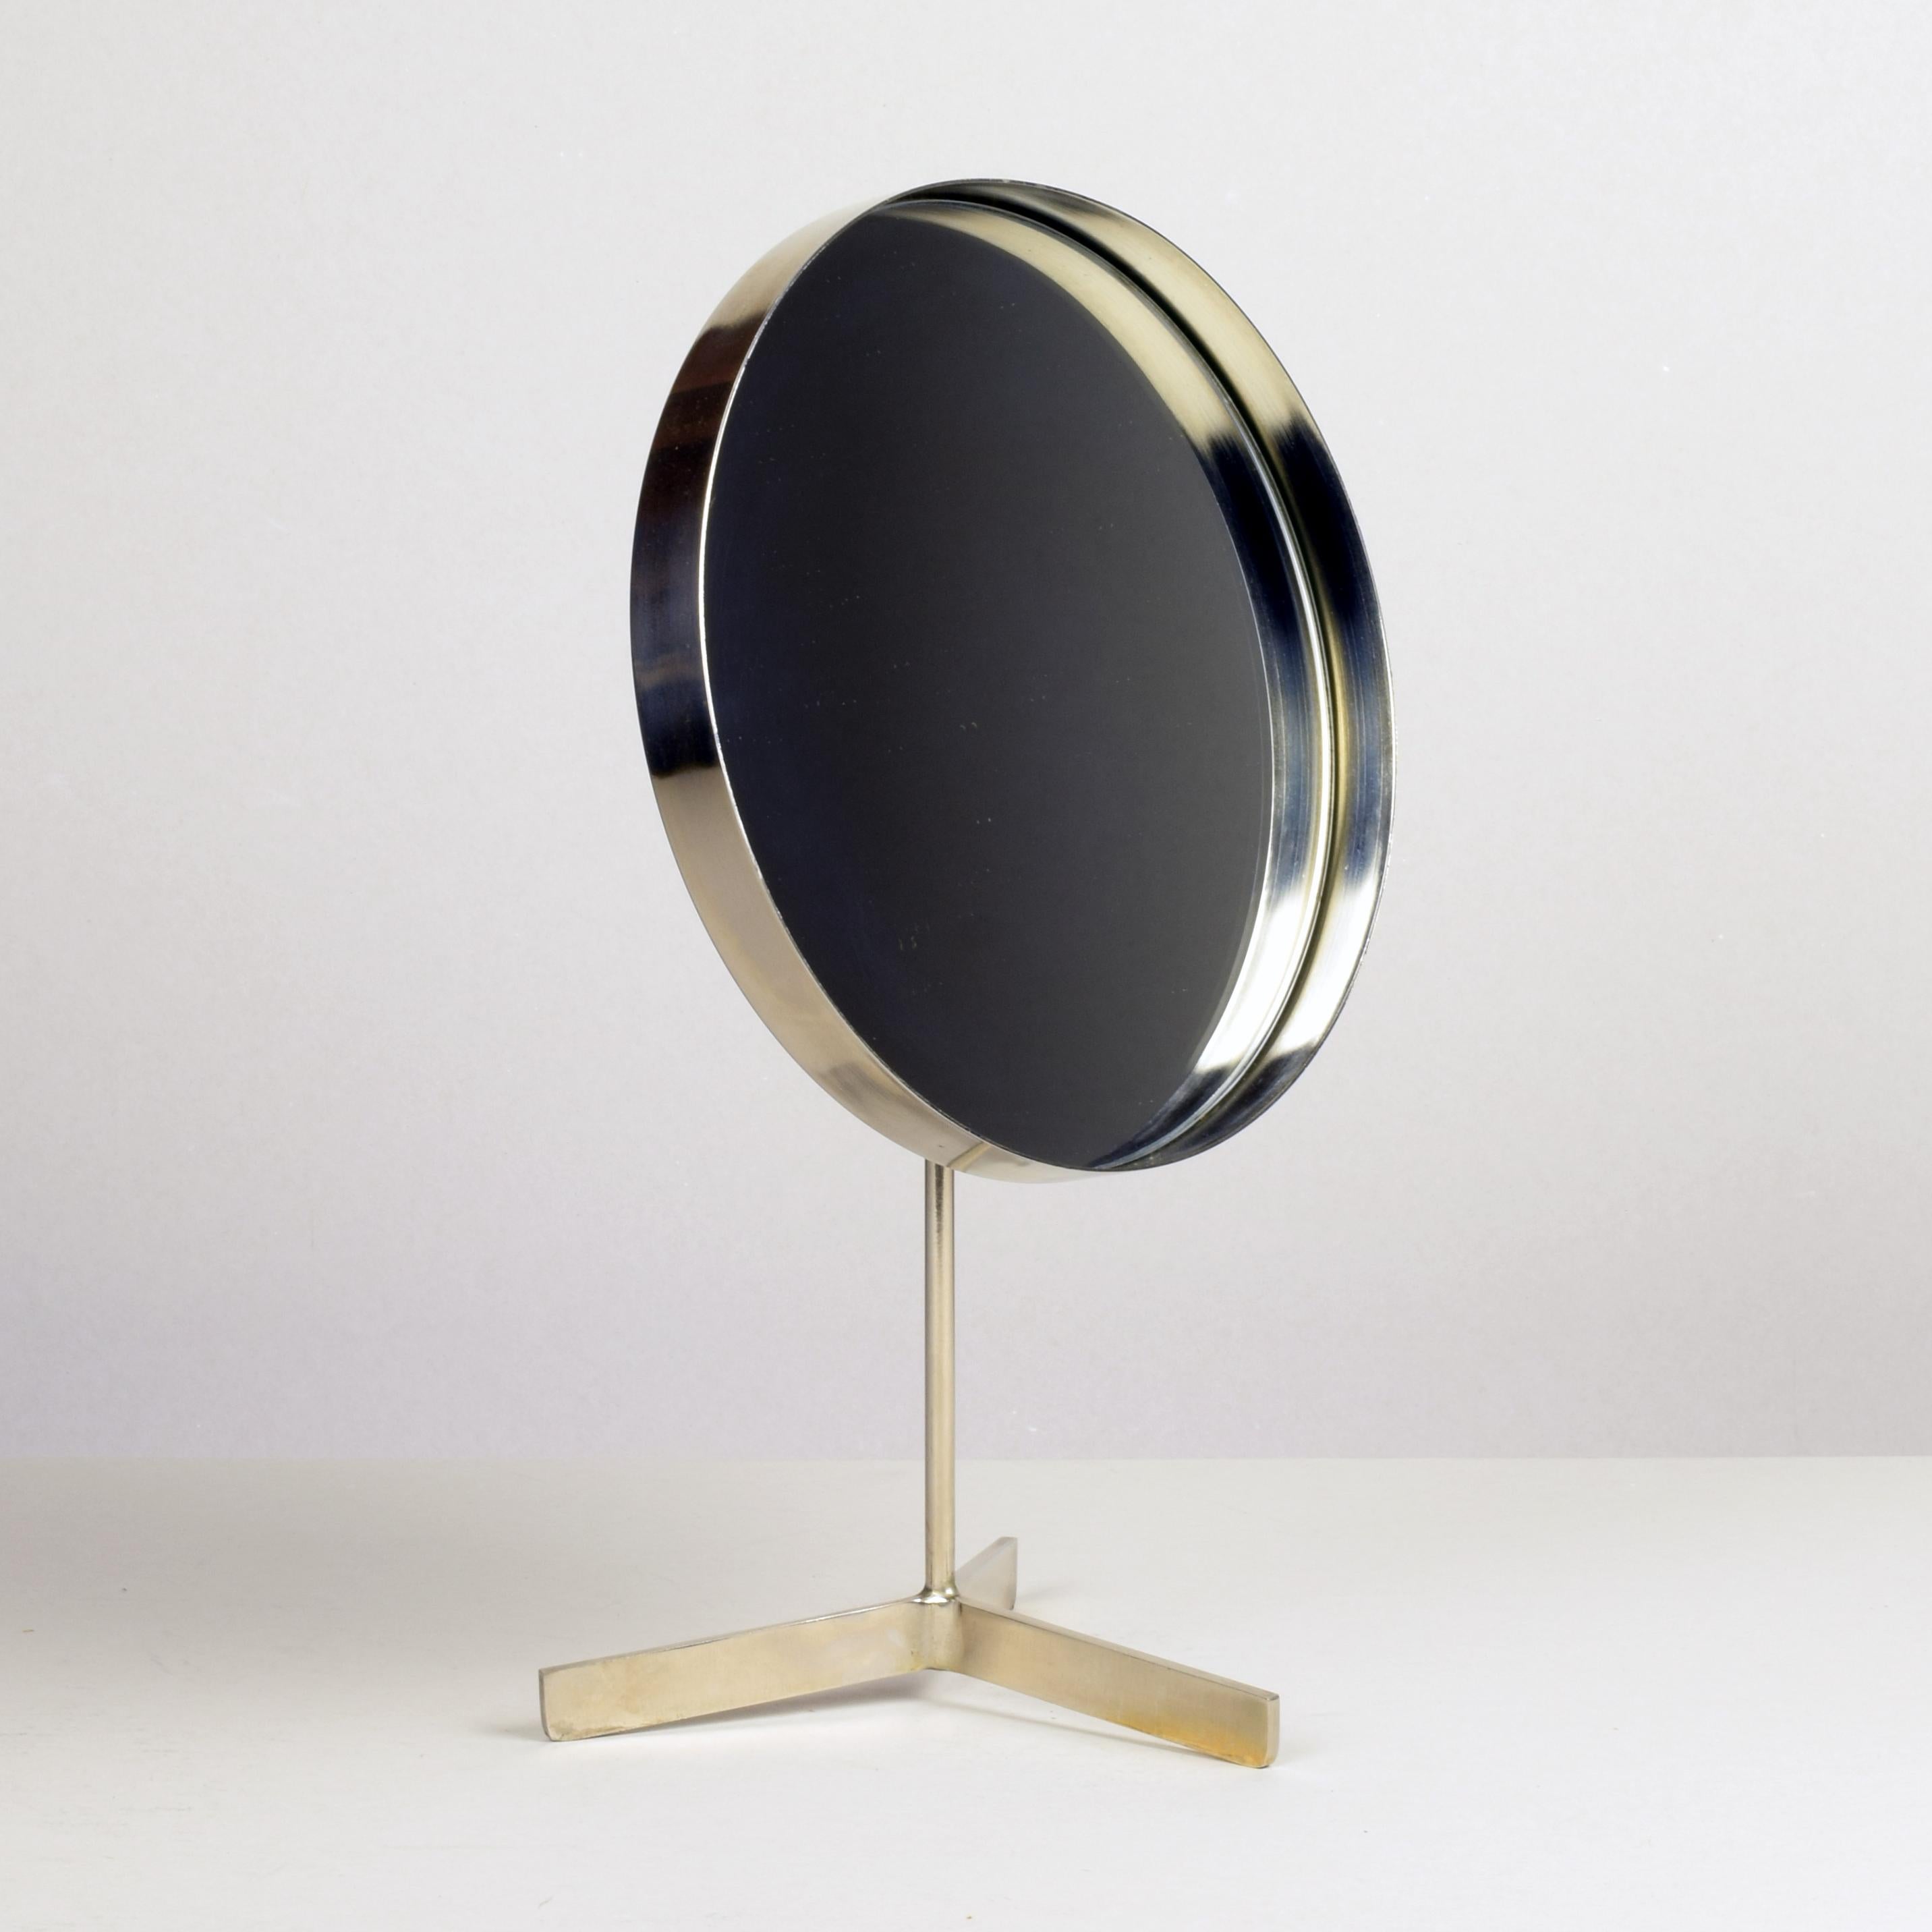 Robert Welsh (designer) attributed.
Durlston Designs Ltd (manufacturer)
A modernist vanity table mirror, circa 1960s.

Nickel-plated steel with mirrored glass insert. Adjustable.

Label to rear: Durlston Design Ltd, made in England - Hersham,